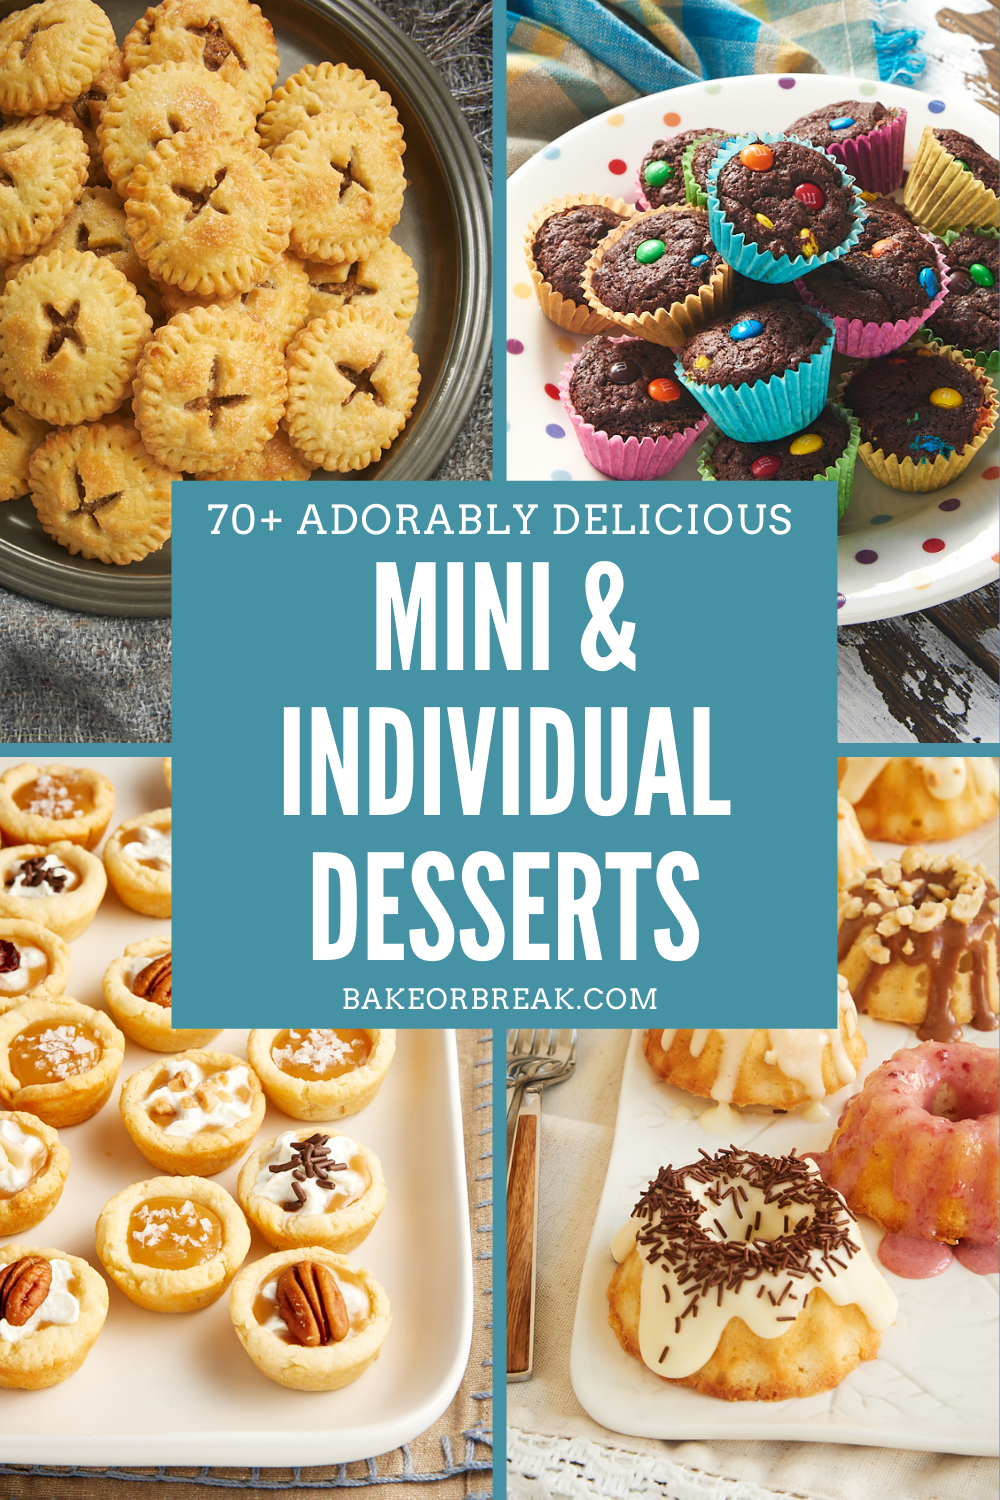 70+ Adorably Delicious Mini & Individual Desserts bakeorbreak.com